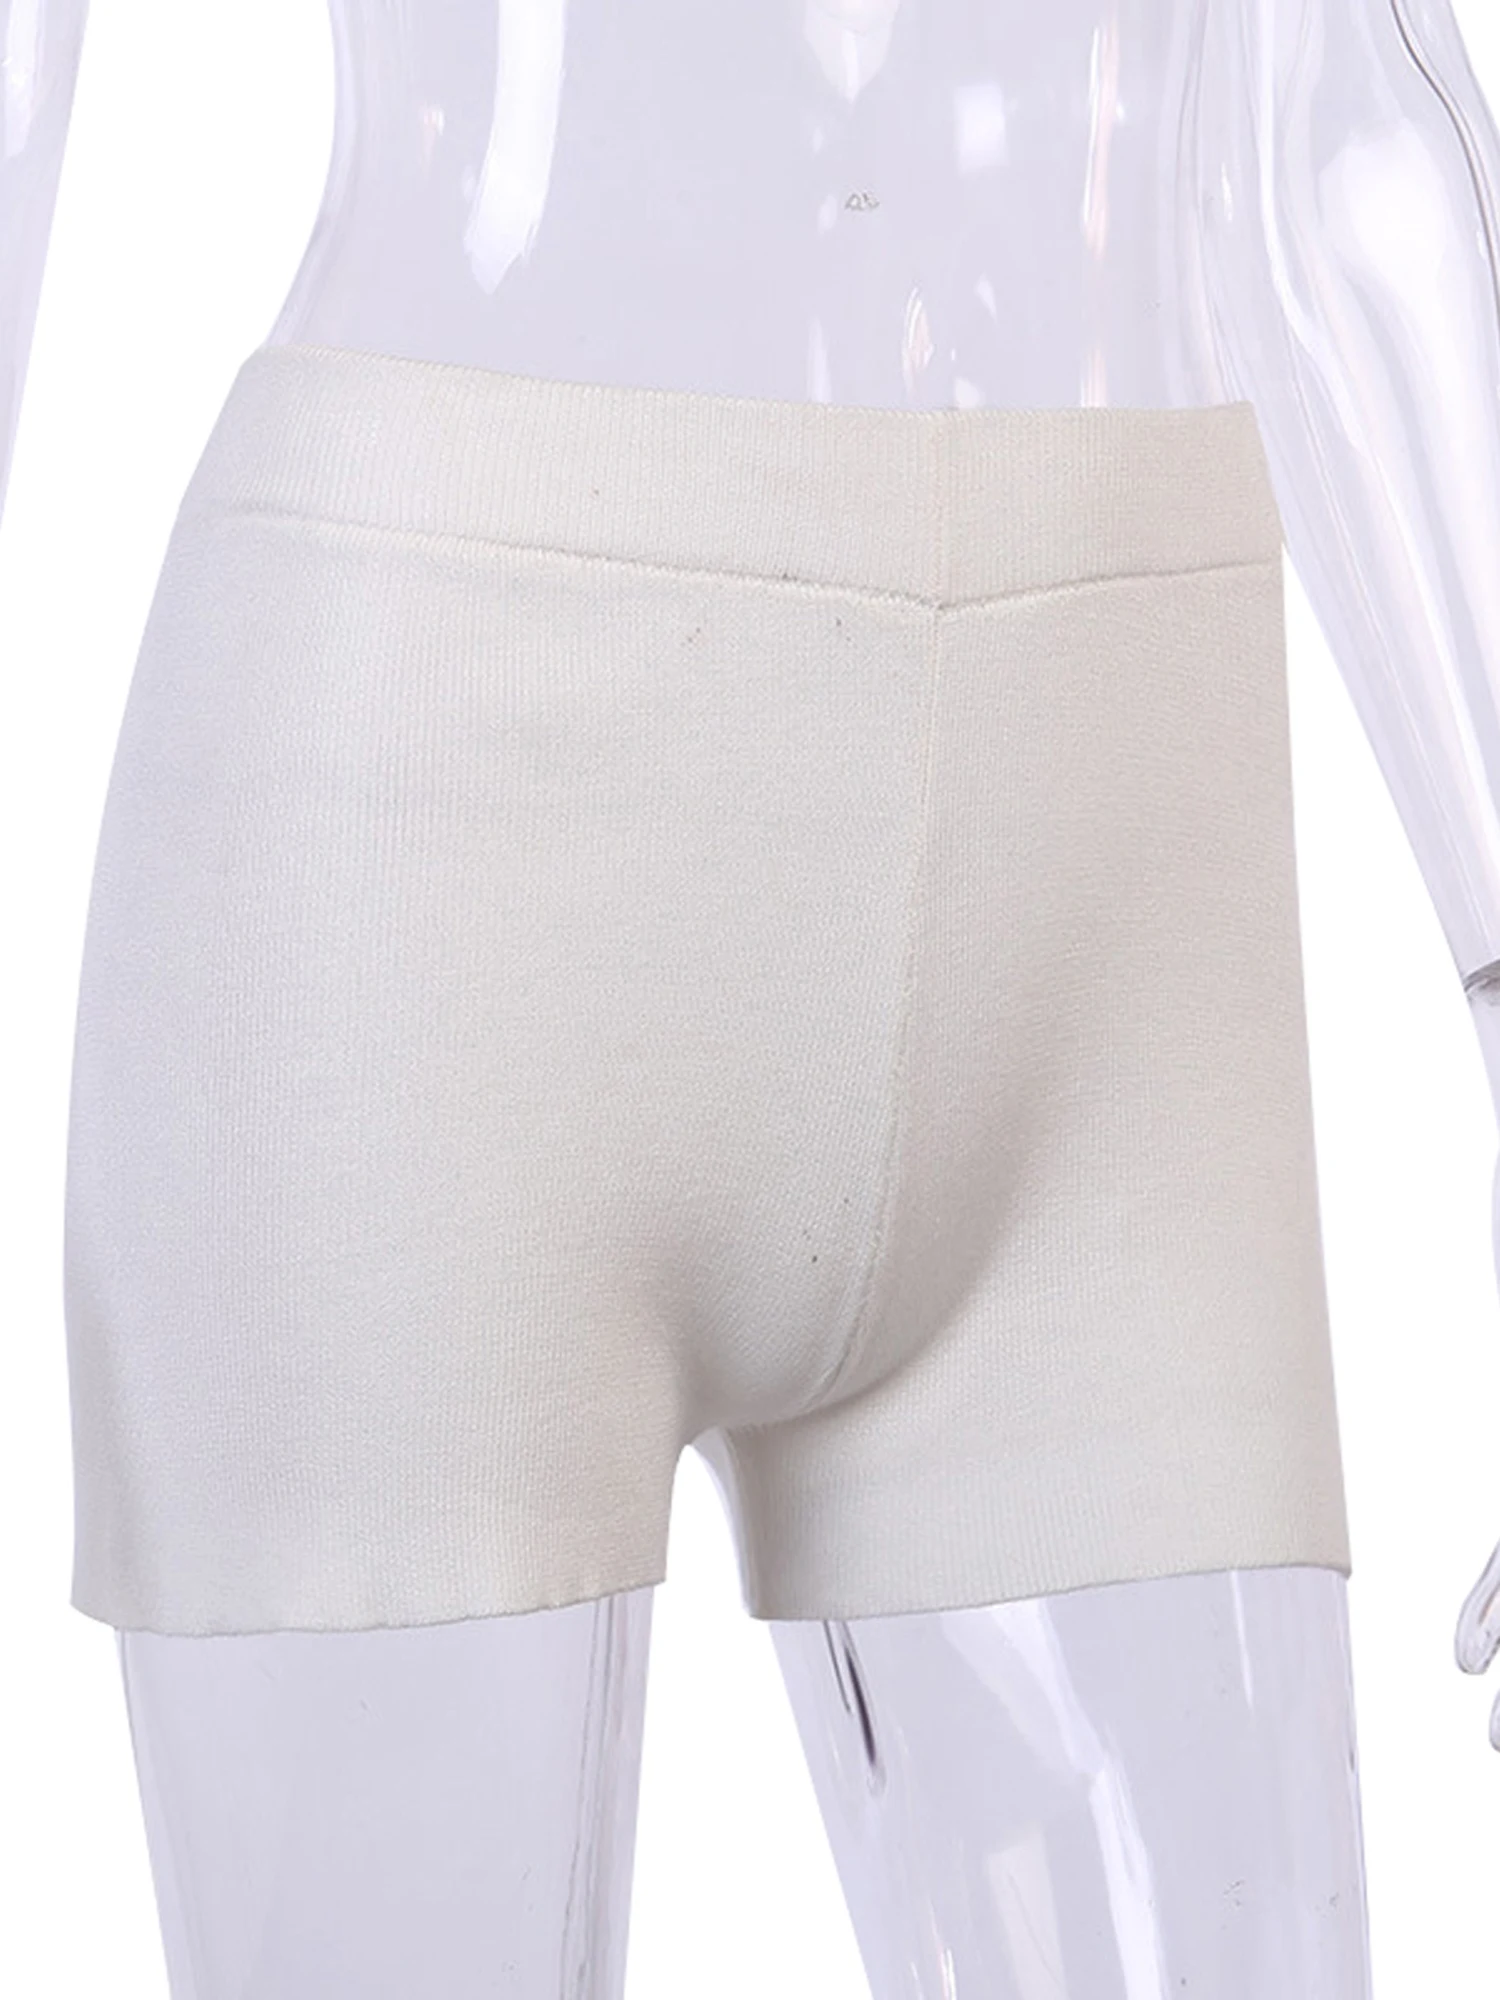 Women's shorts Summer Cycling Bike Shorts Stretch Basic Short Solid Black White Shorts Woman Sweat Shorts Strike nike pro shorts